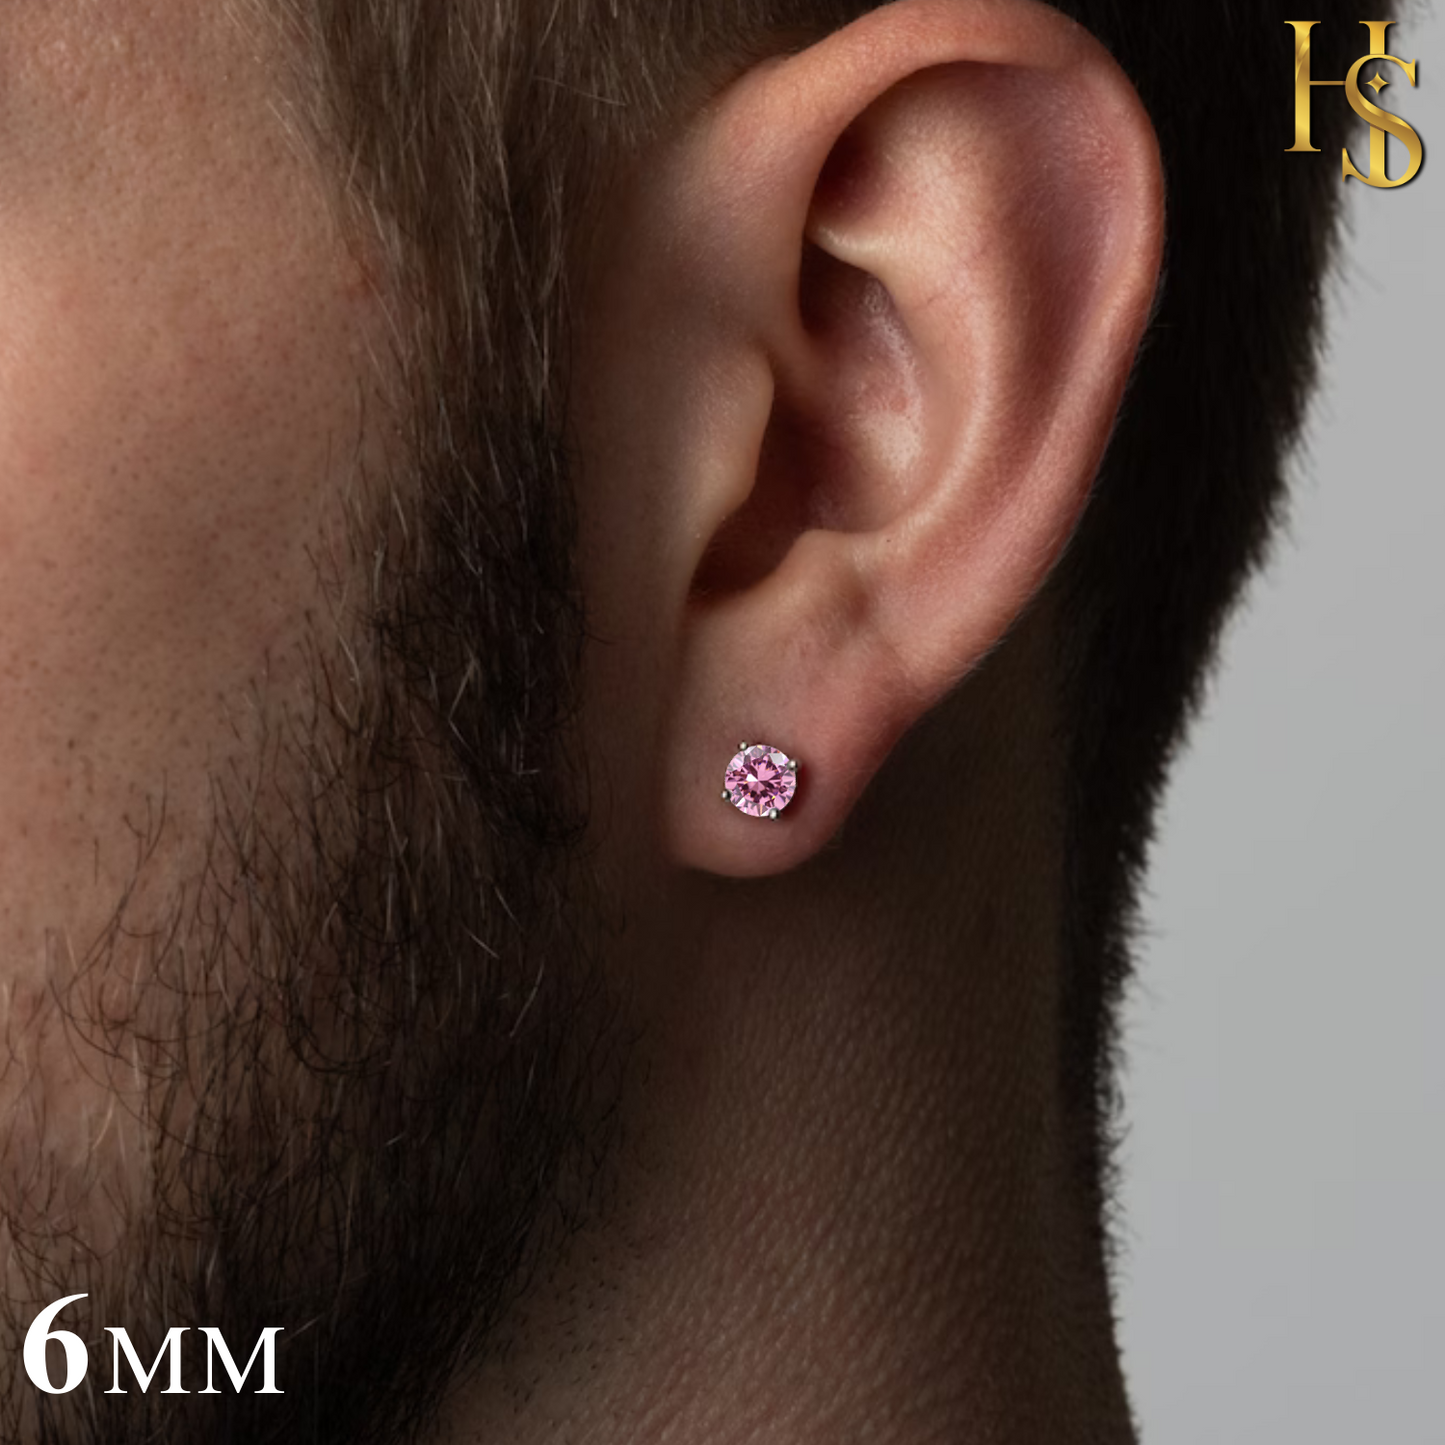 Men's Solitaire Stud Earring - 925 Silver - Birthstone October Tourmaline Zirconia - 1 Piece